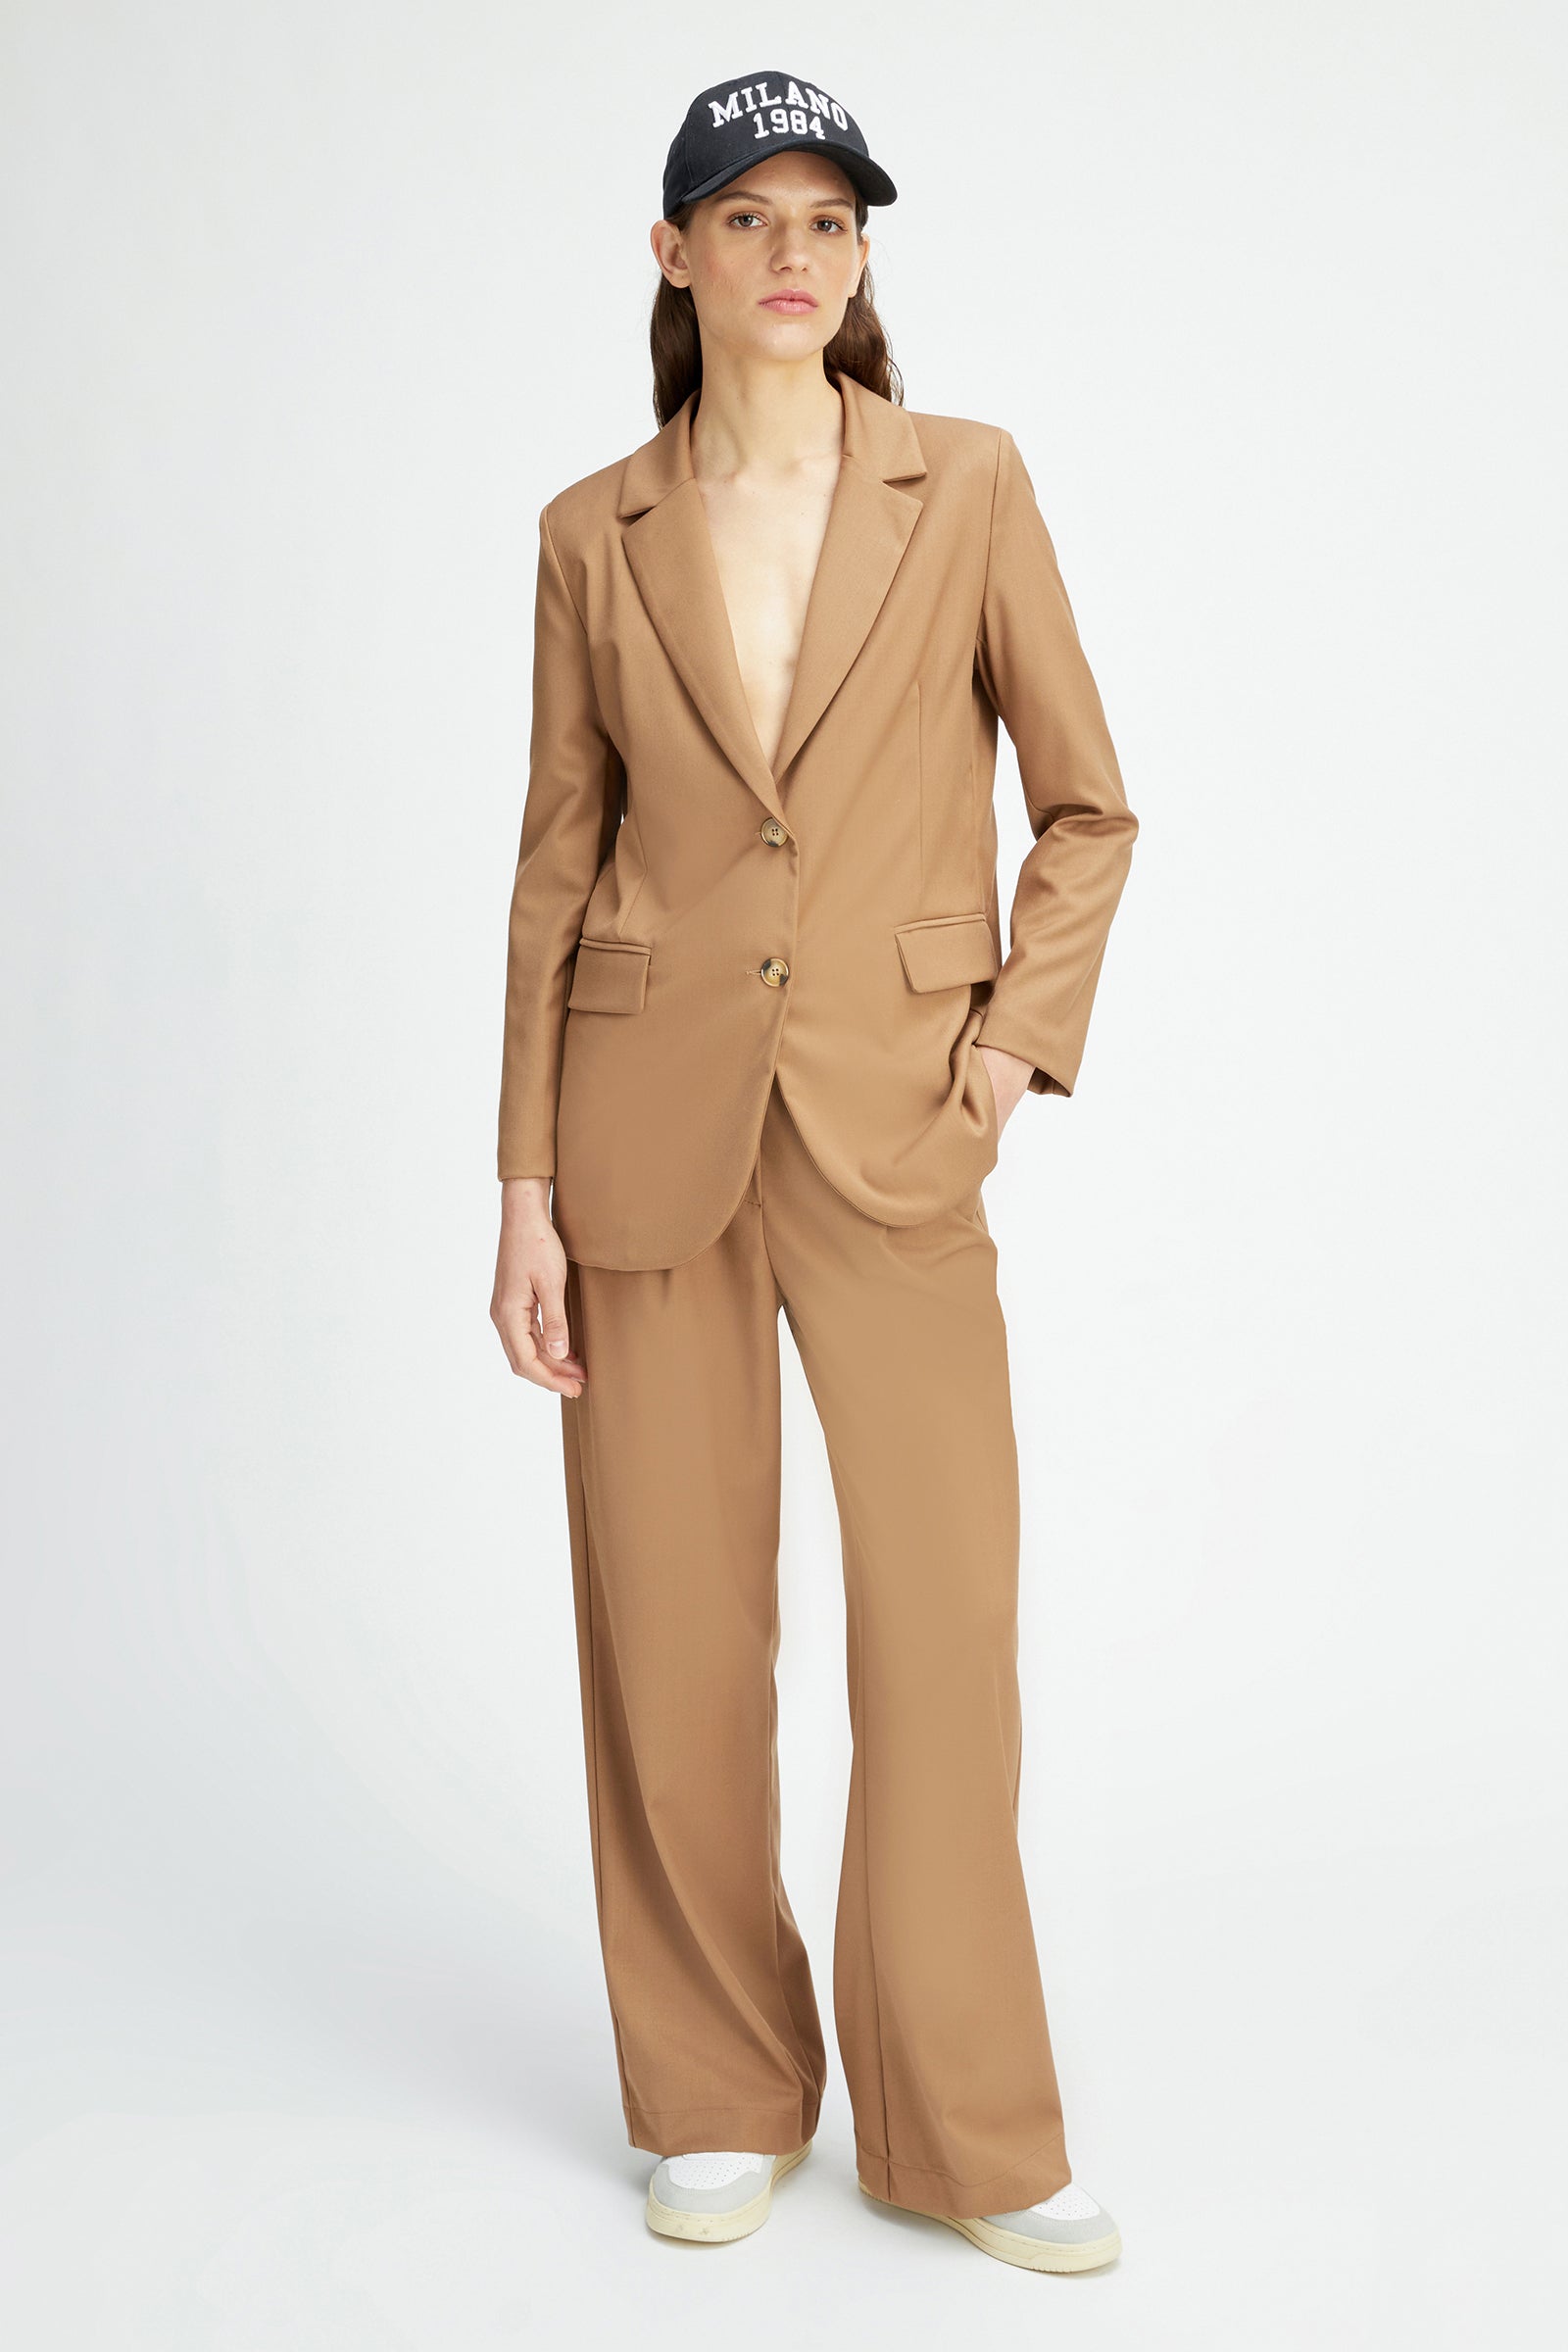 Jacket, Skirt or Trouser Suits for Women | PullBear